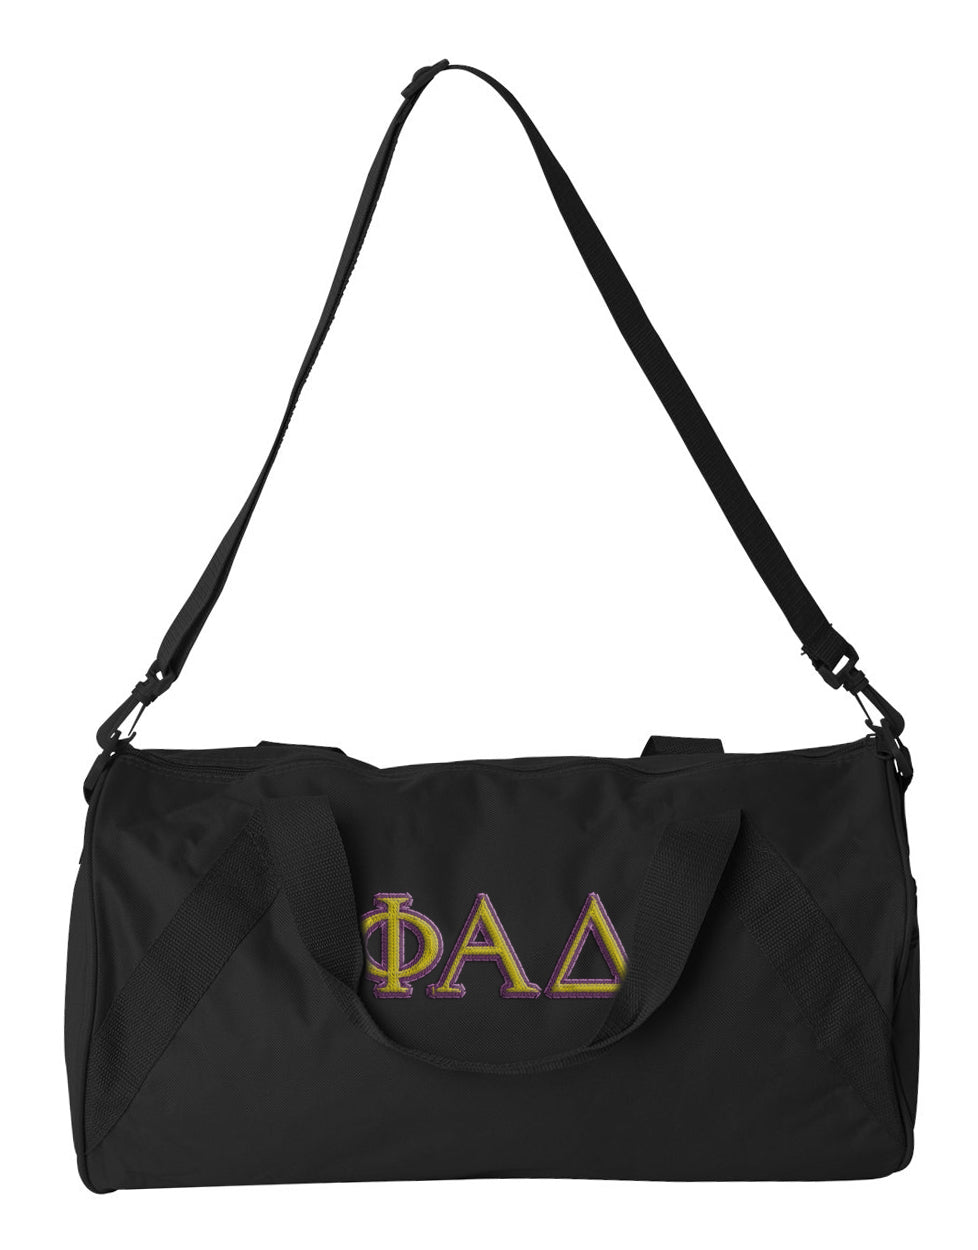 Phi Alpha Delta Embroidered Duffel Bag